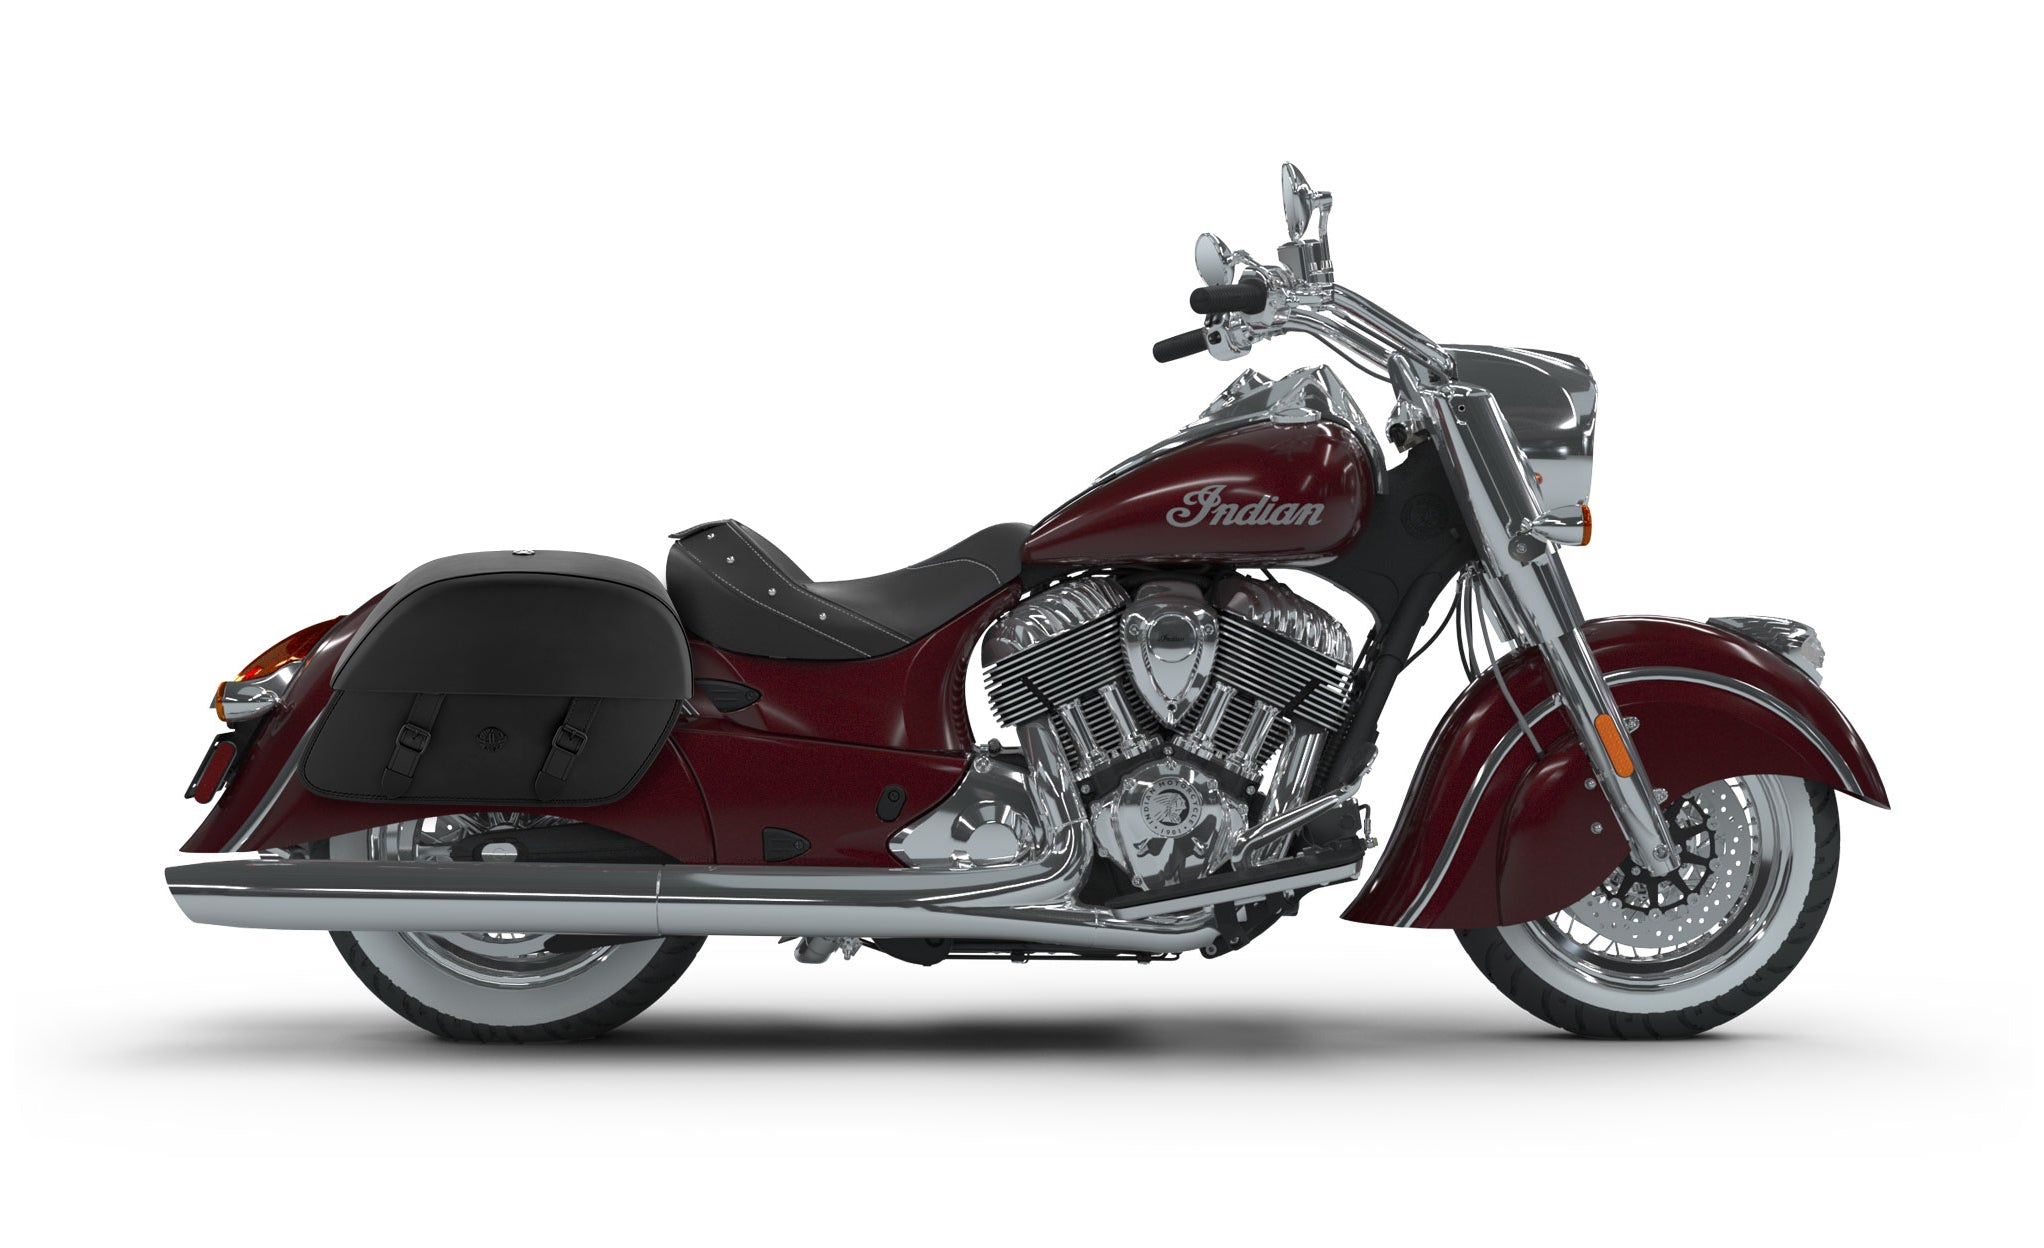 Viking Baelor Large Indian Chief Classic Leather Motorcycle Saddlebags on Bike Photo @expand